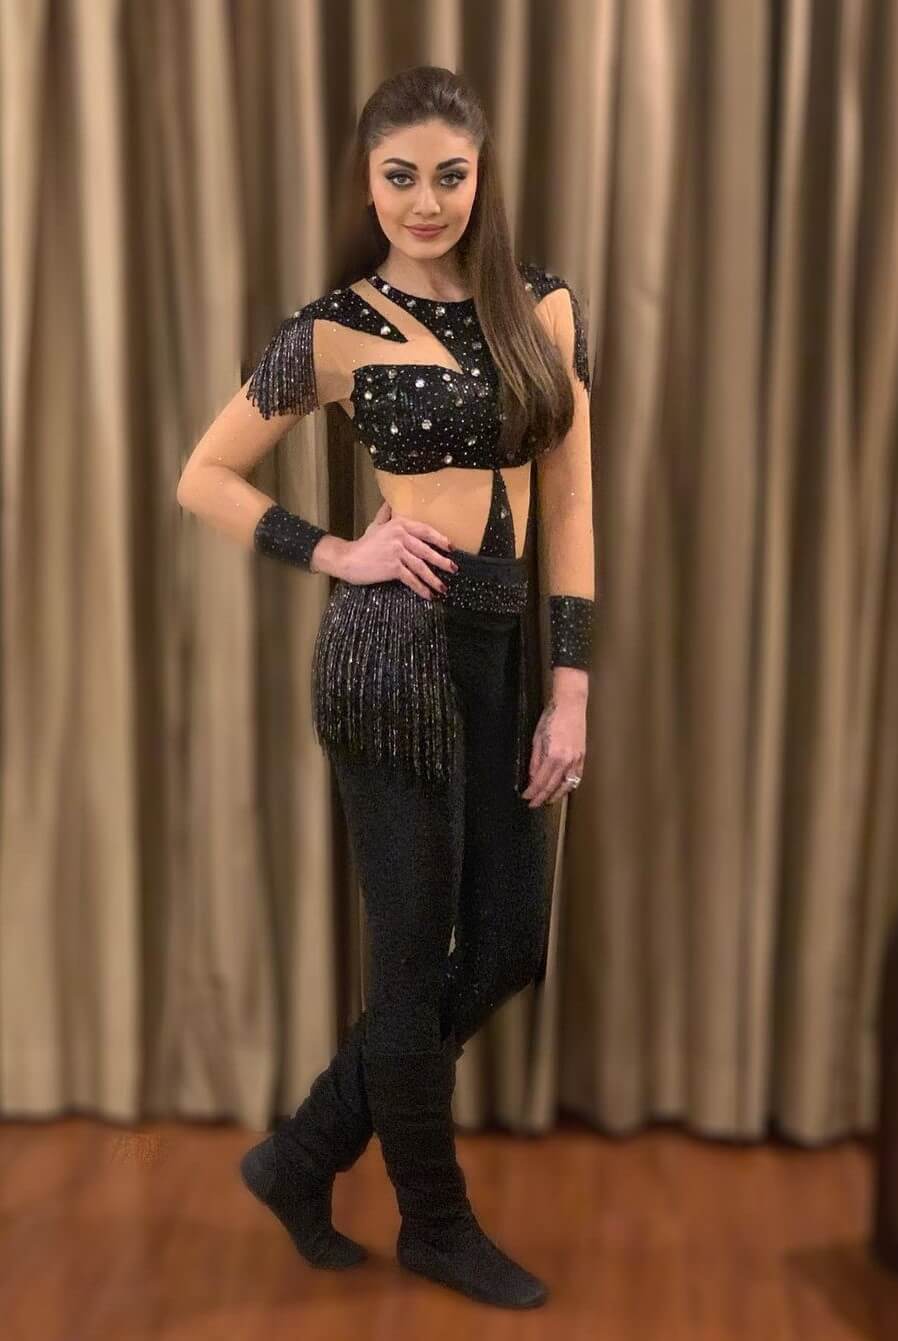 Shefali Jariwala Set Stage On Fire In Her Black Sexy Dress